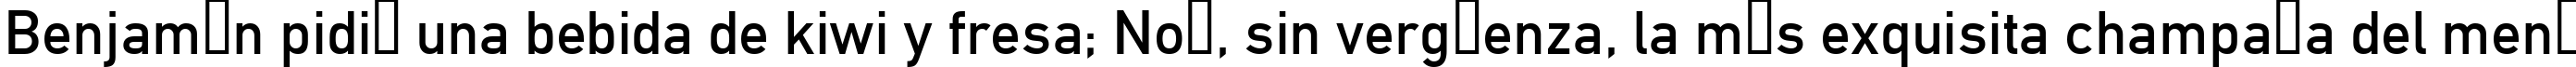 Пример написания шрифтом DinC текста на испанском